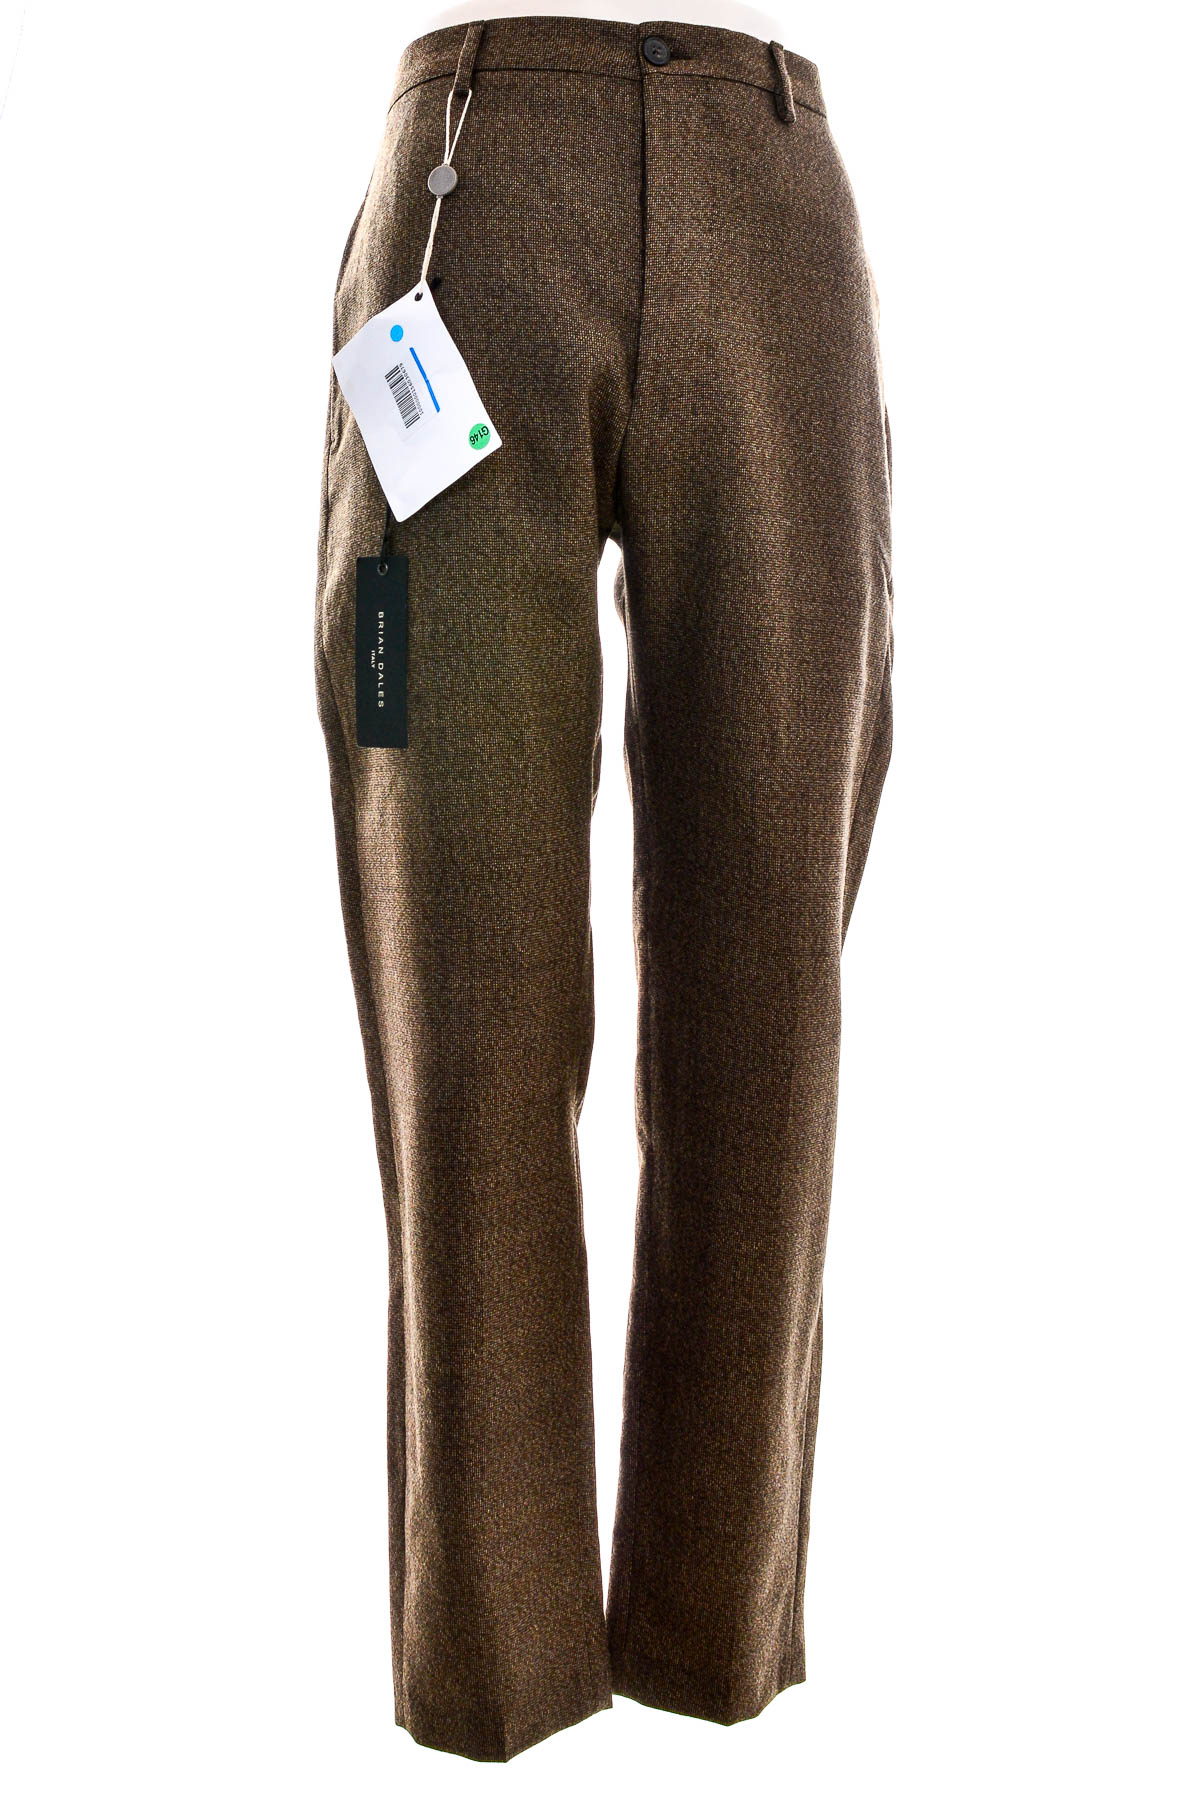 Men's trousers - BRIAN DALES - 0